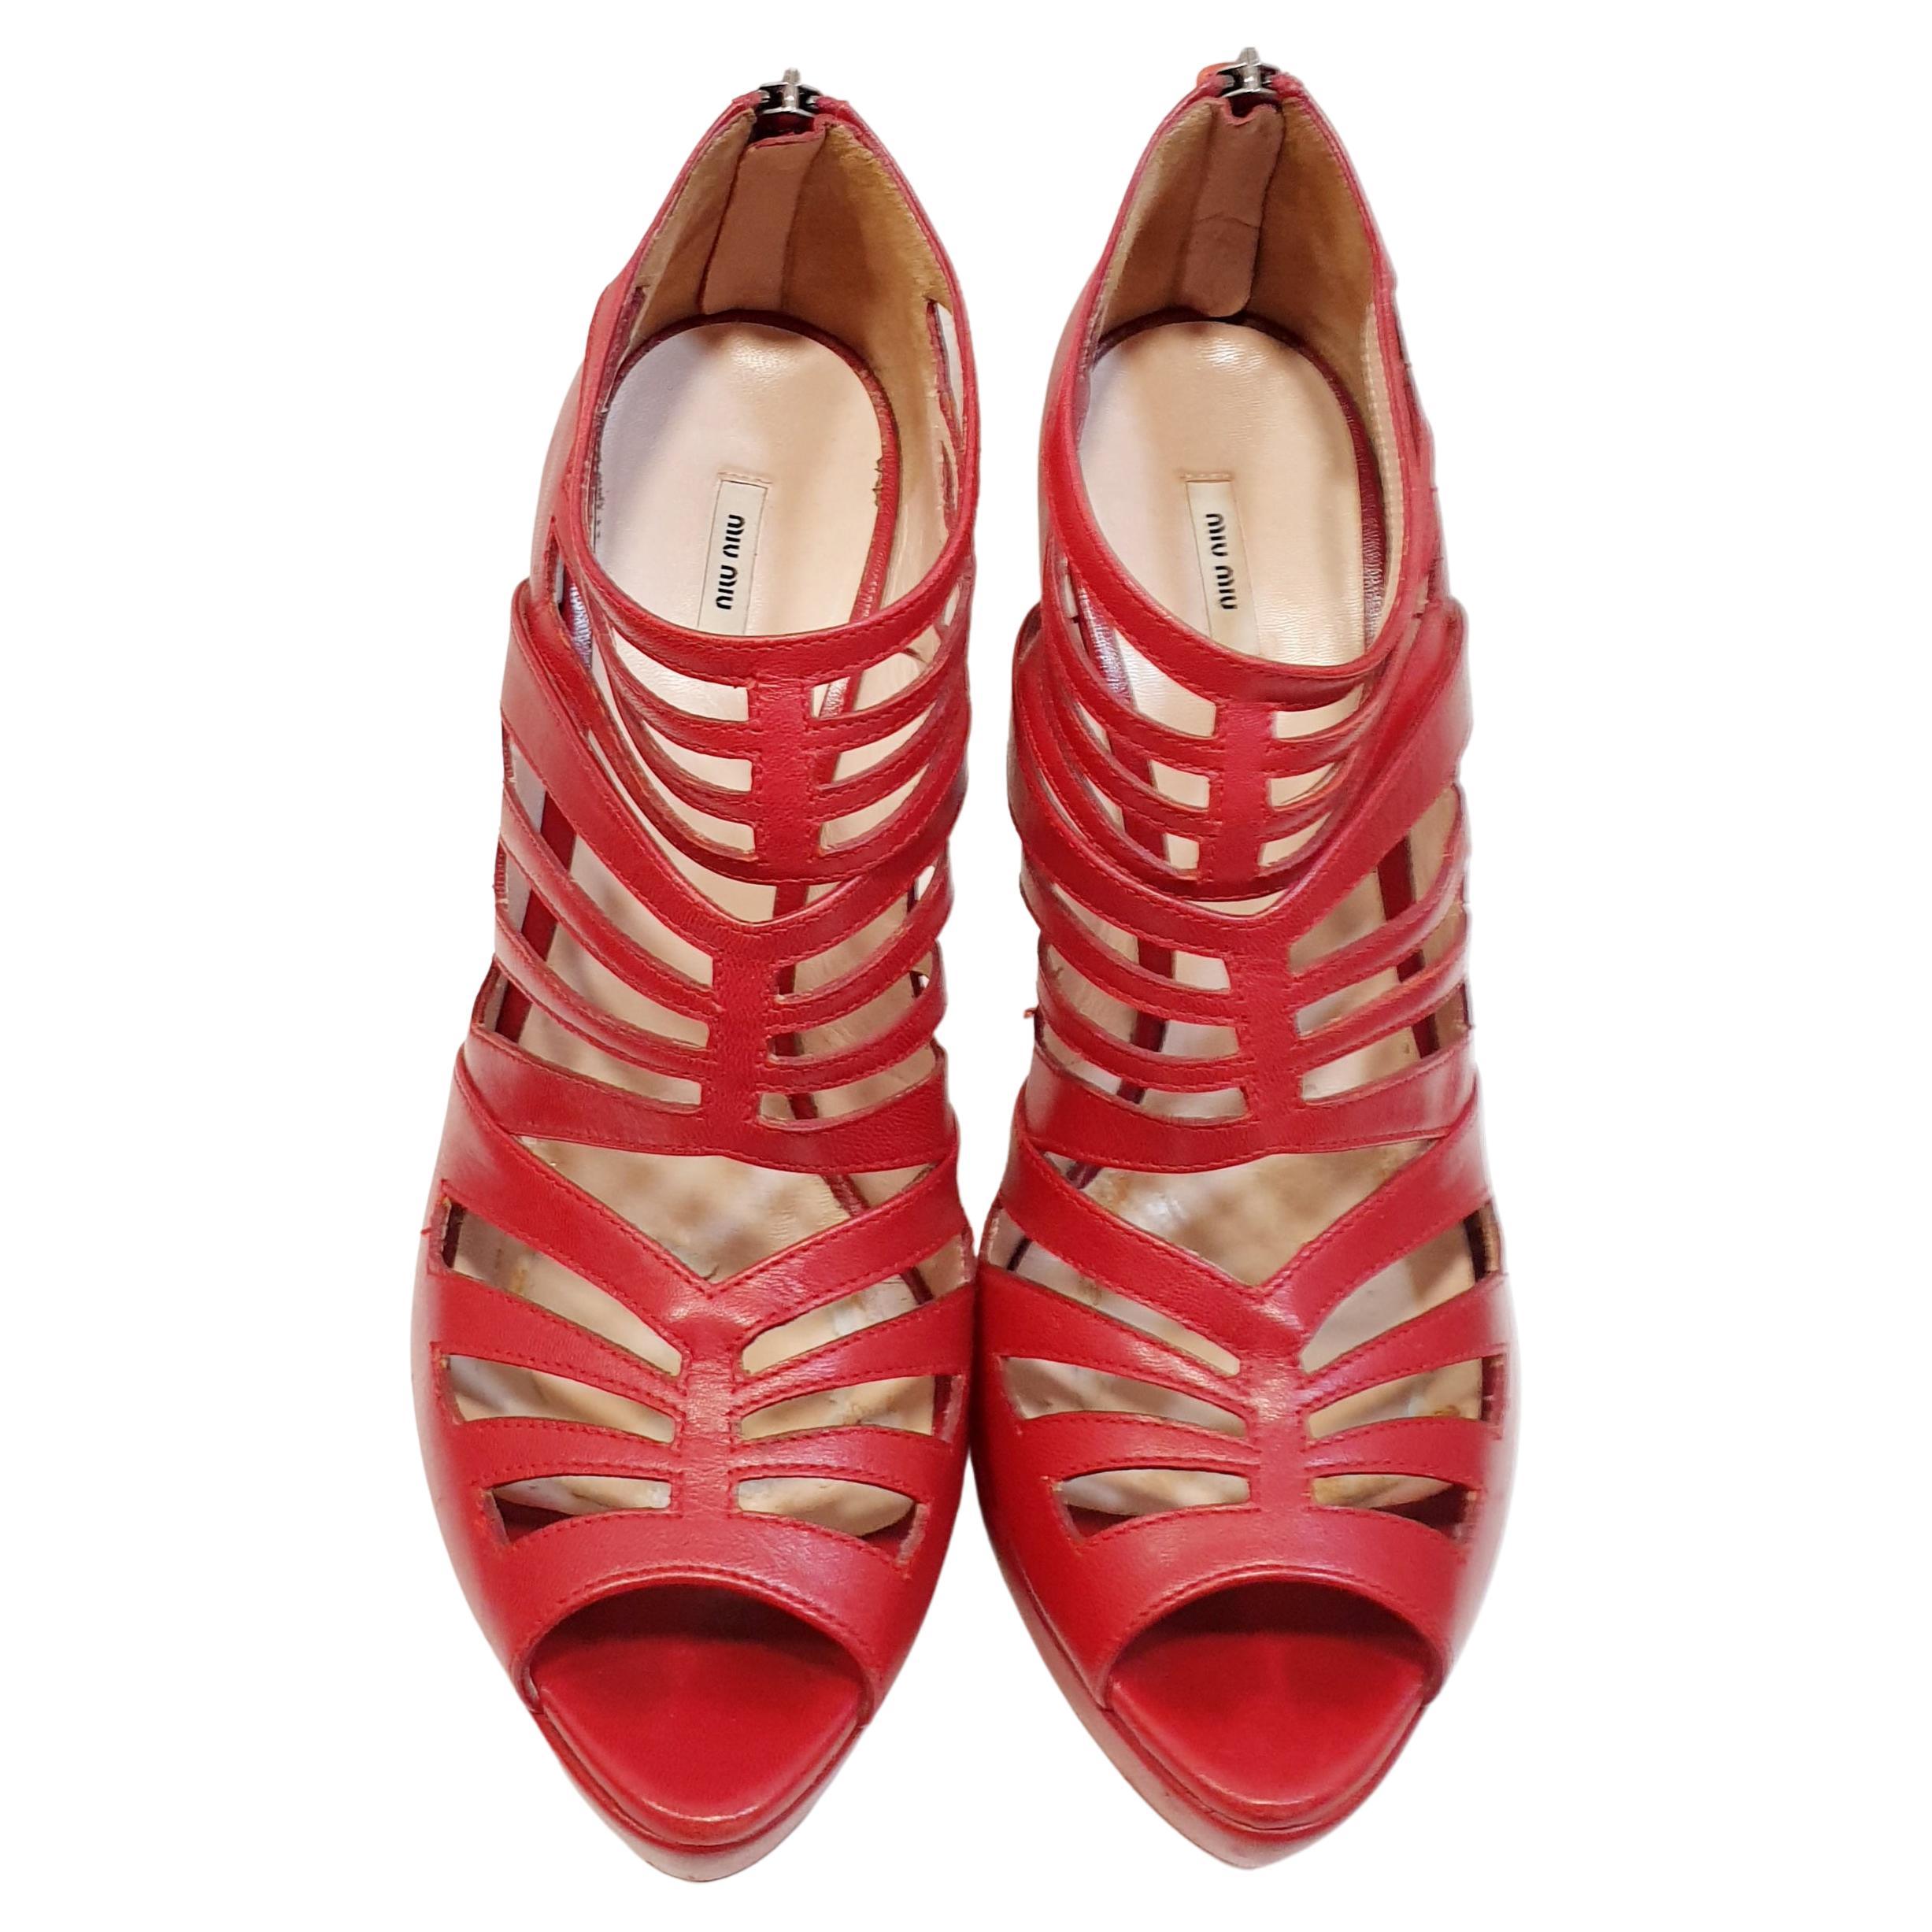 Red Strappy high heel platform Shoes by Miu Miu